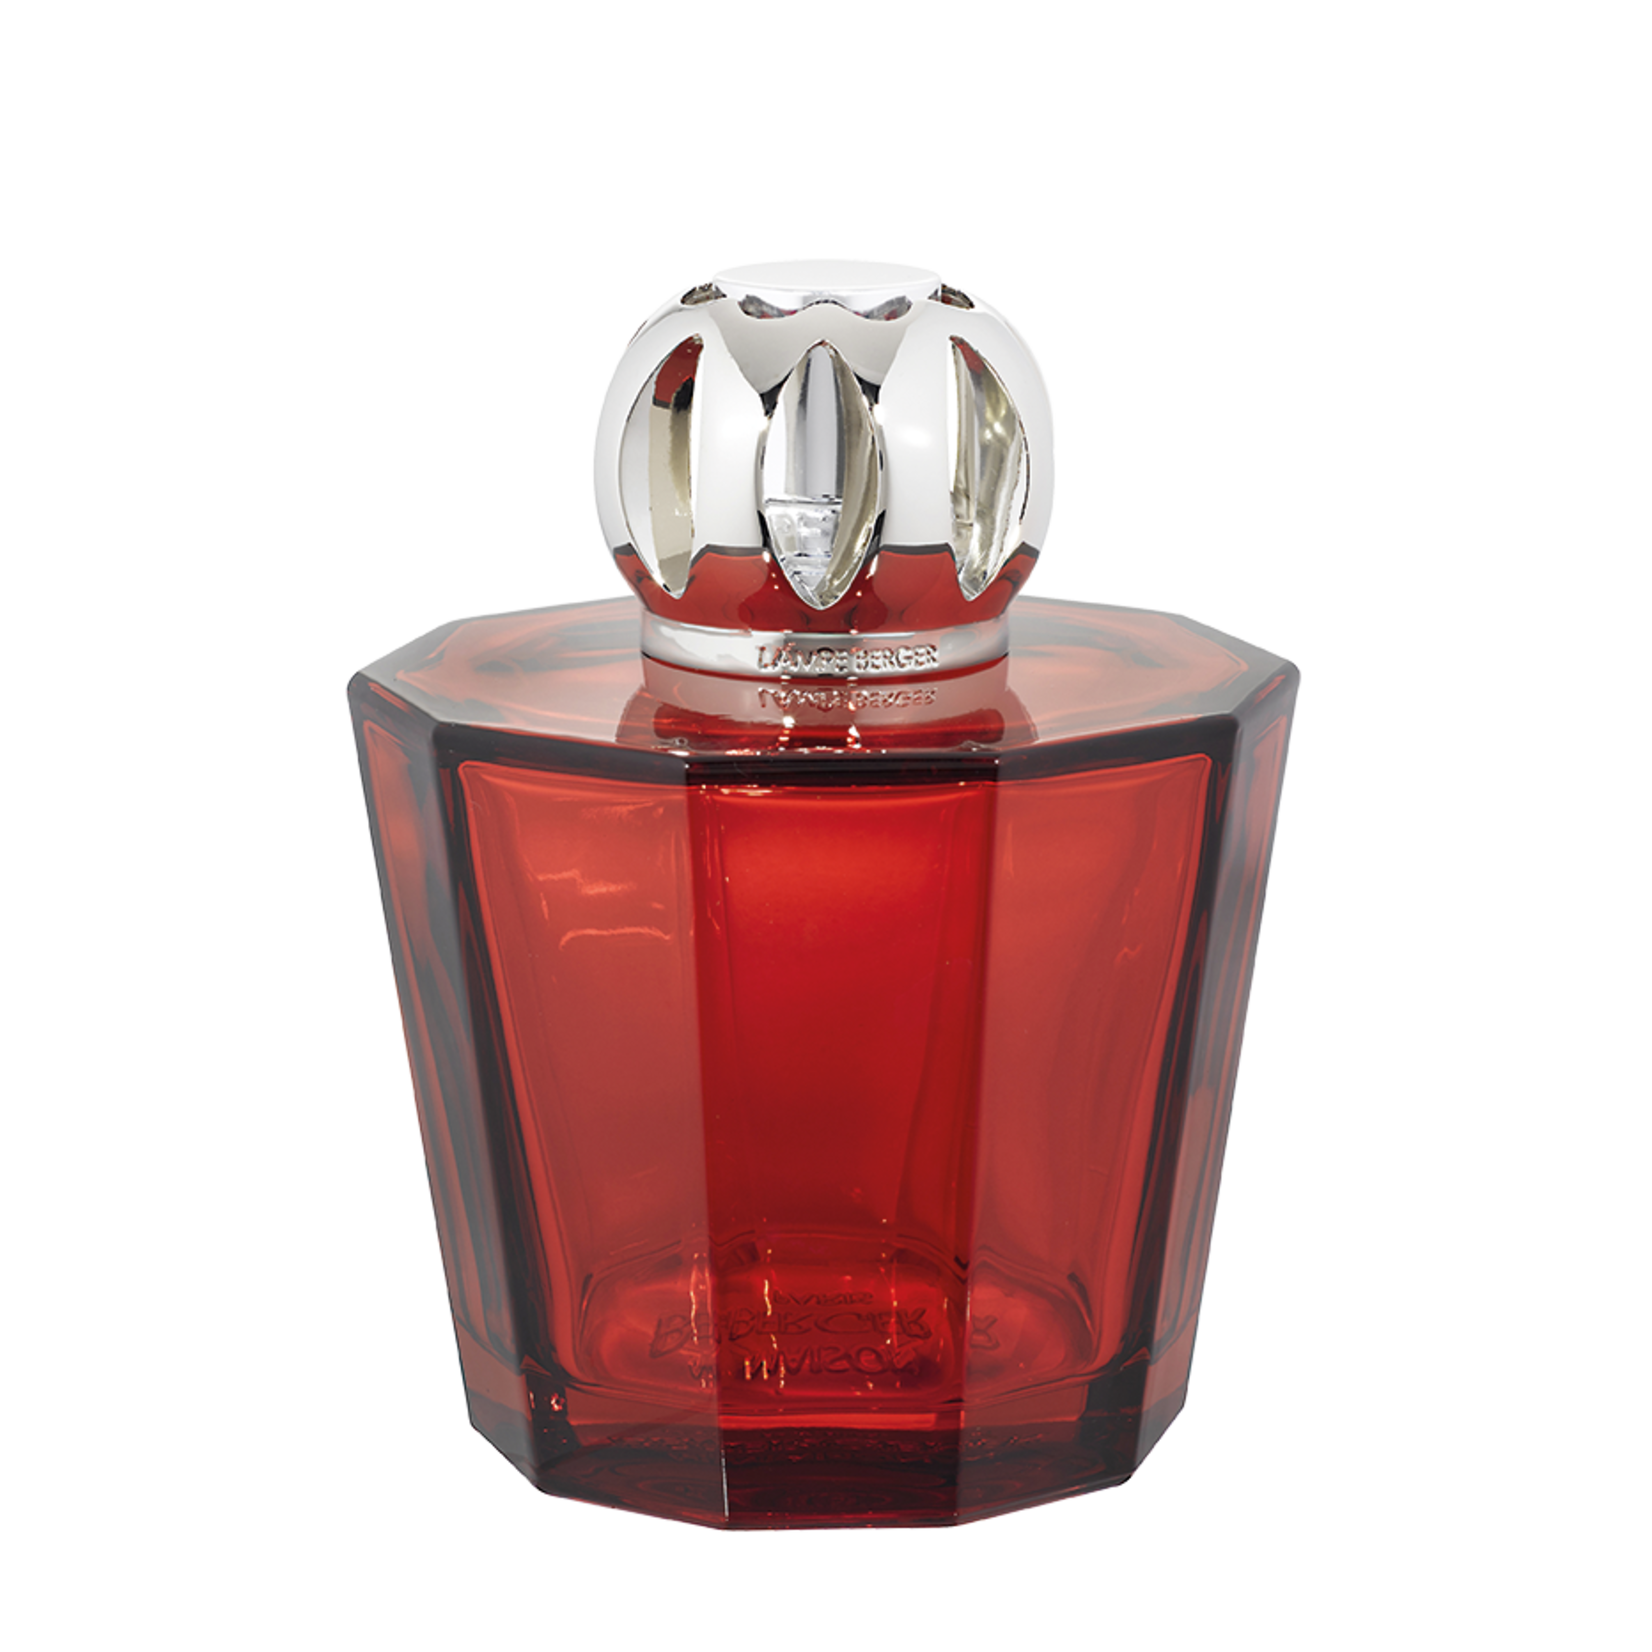 Maison Berger Paris Red Crystal Lamp - 4495